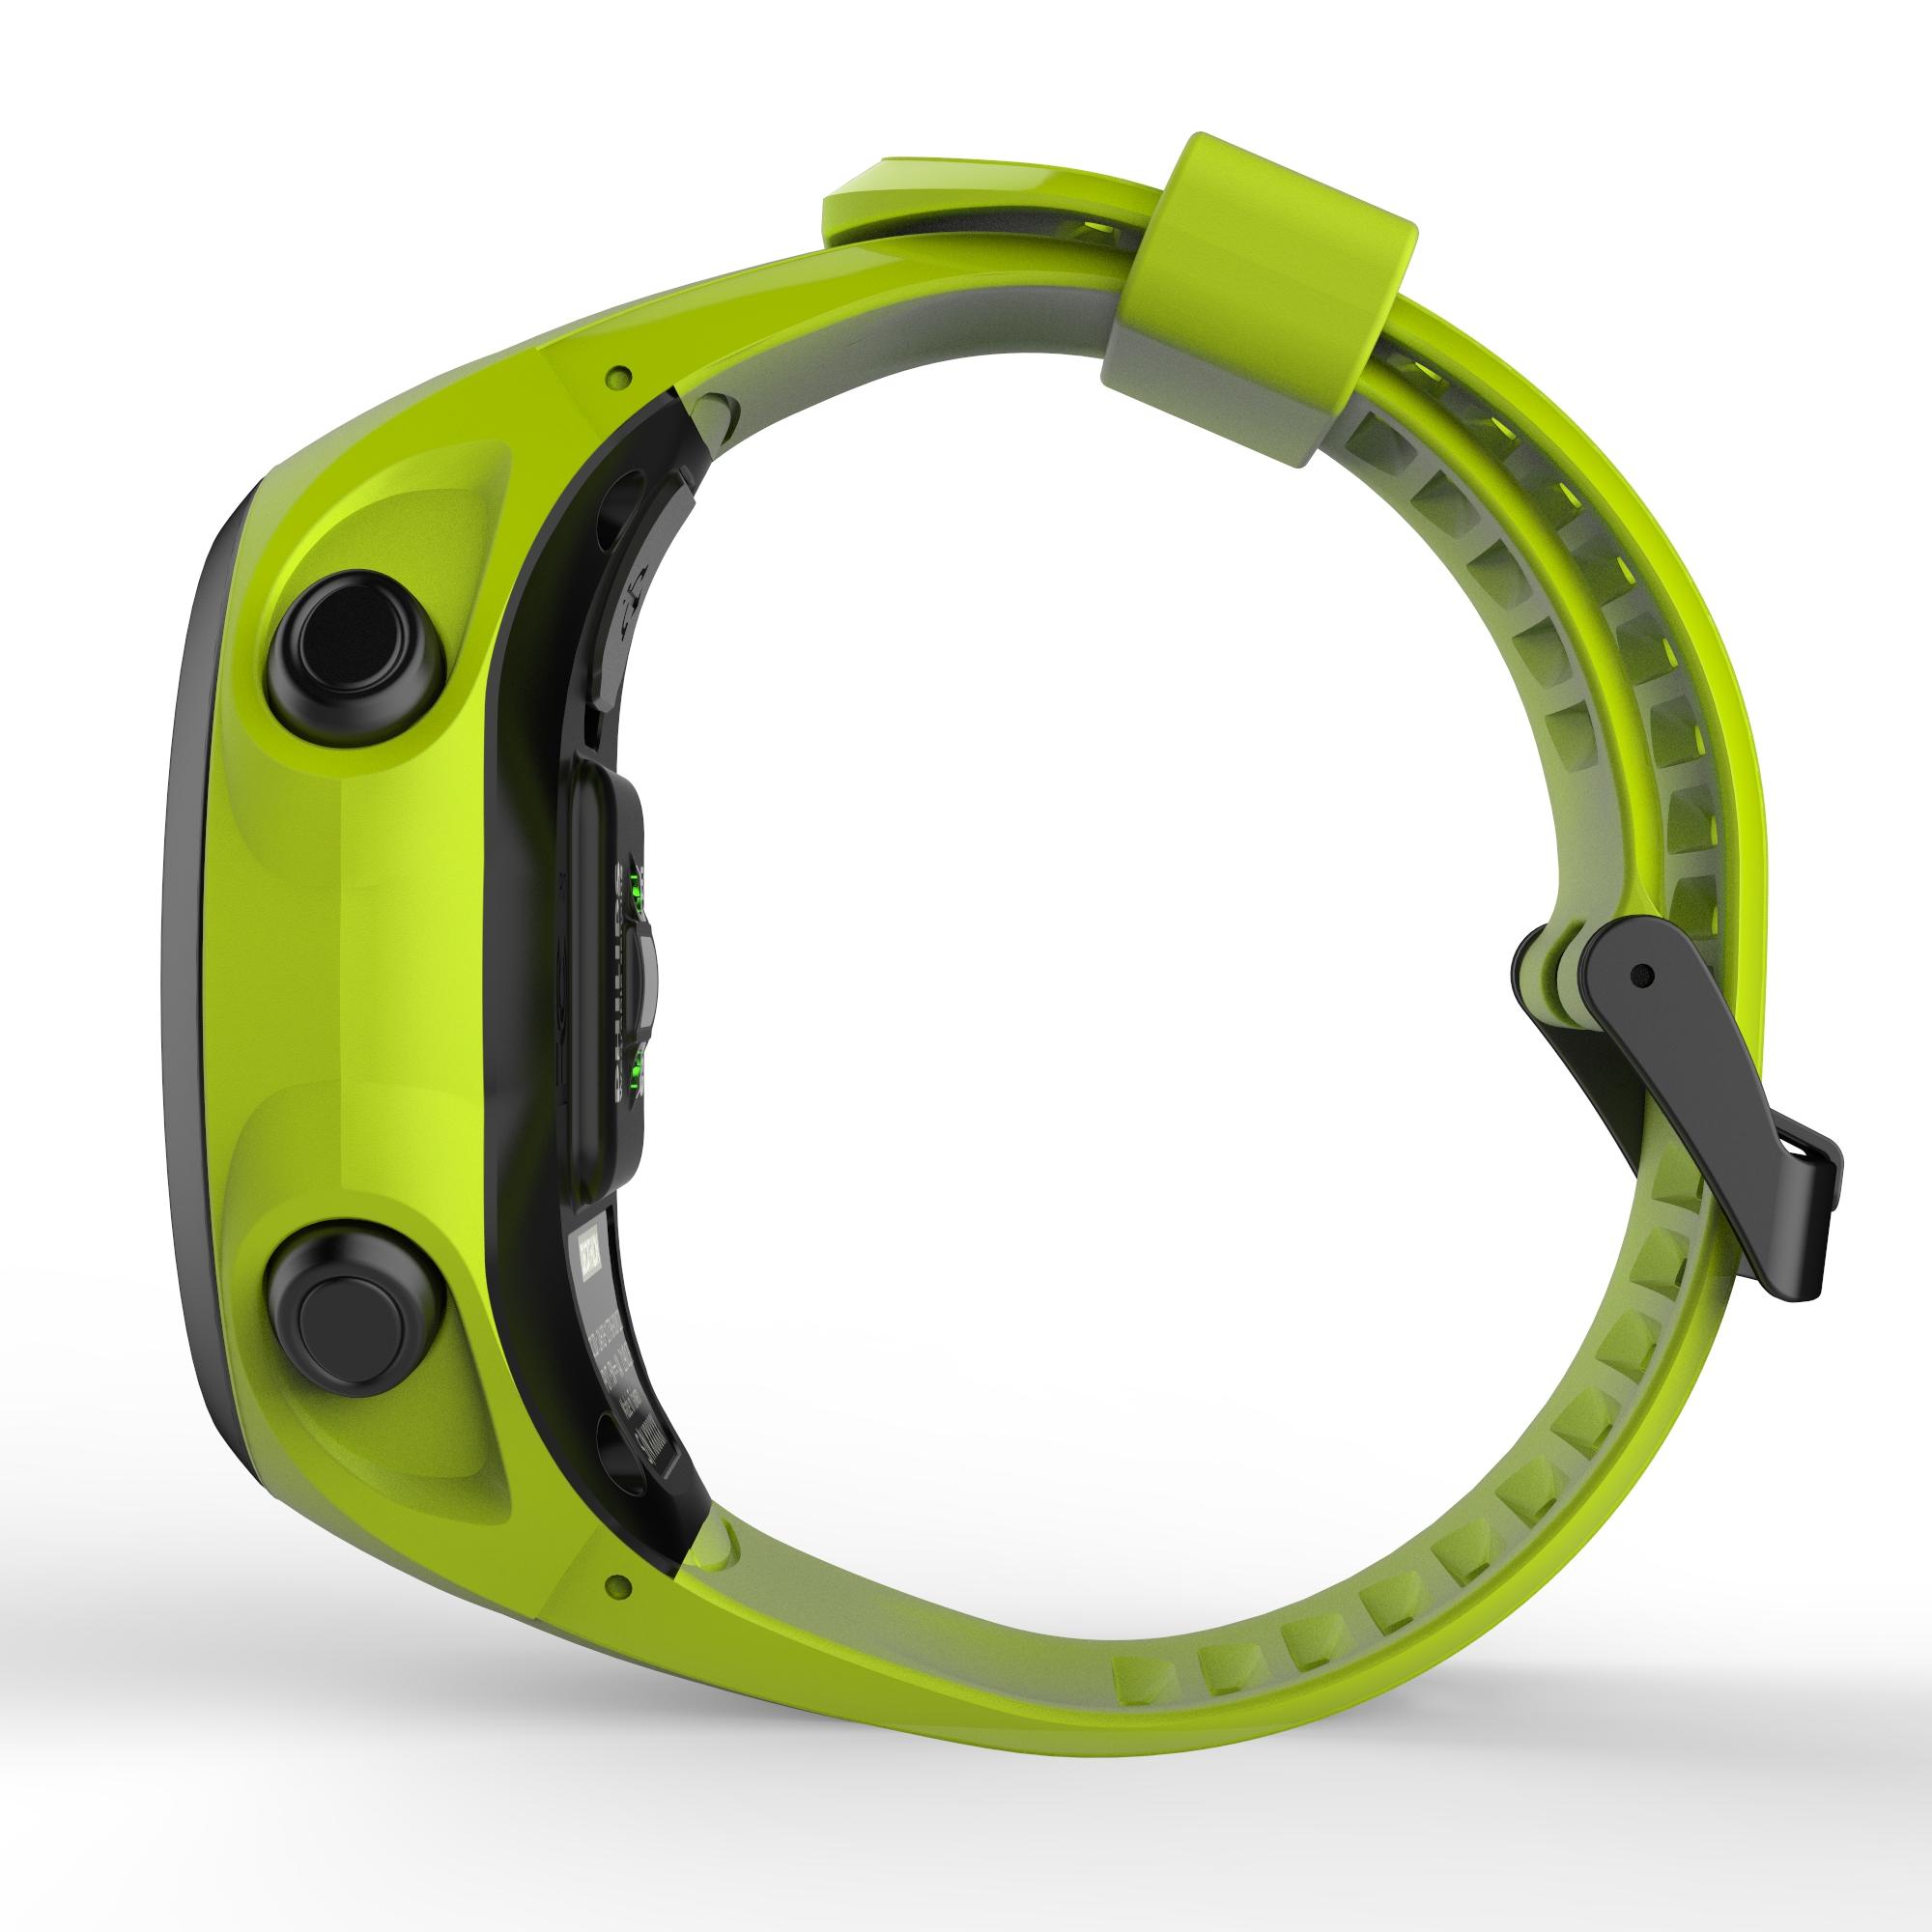 ONmove 500 GPS running watch and wrist heart rate monitor - yellow 13/17